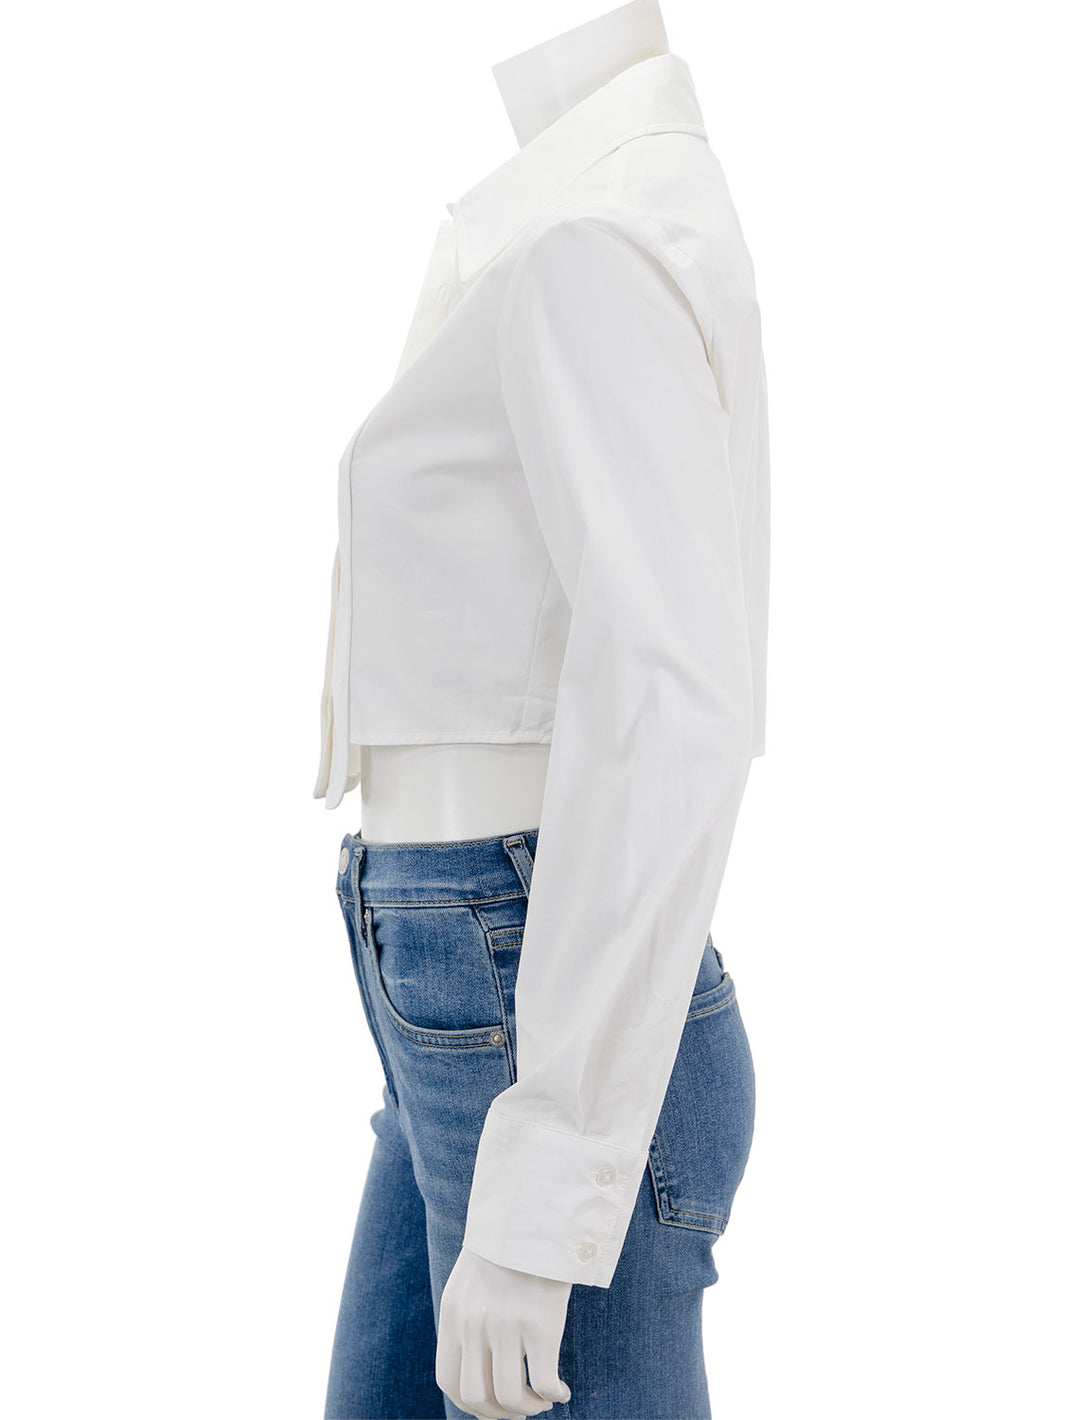 Side view of Saint Art's joyce tuxedo shirt in white.